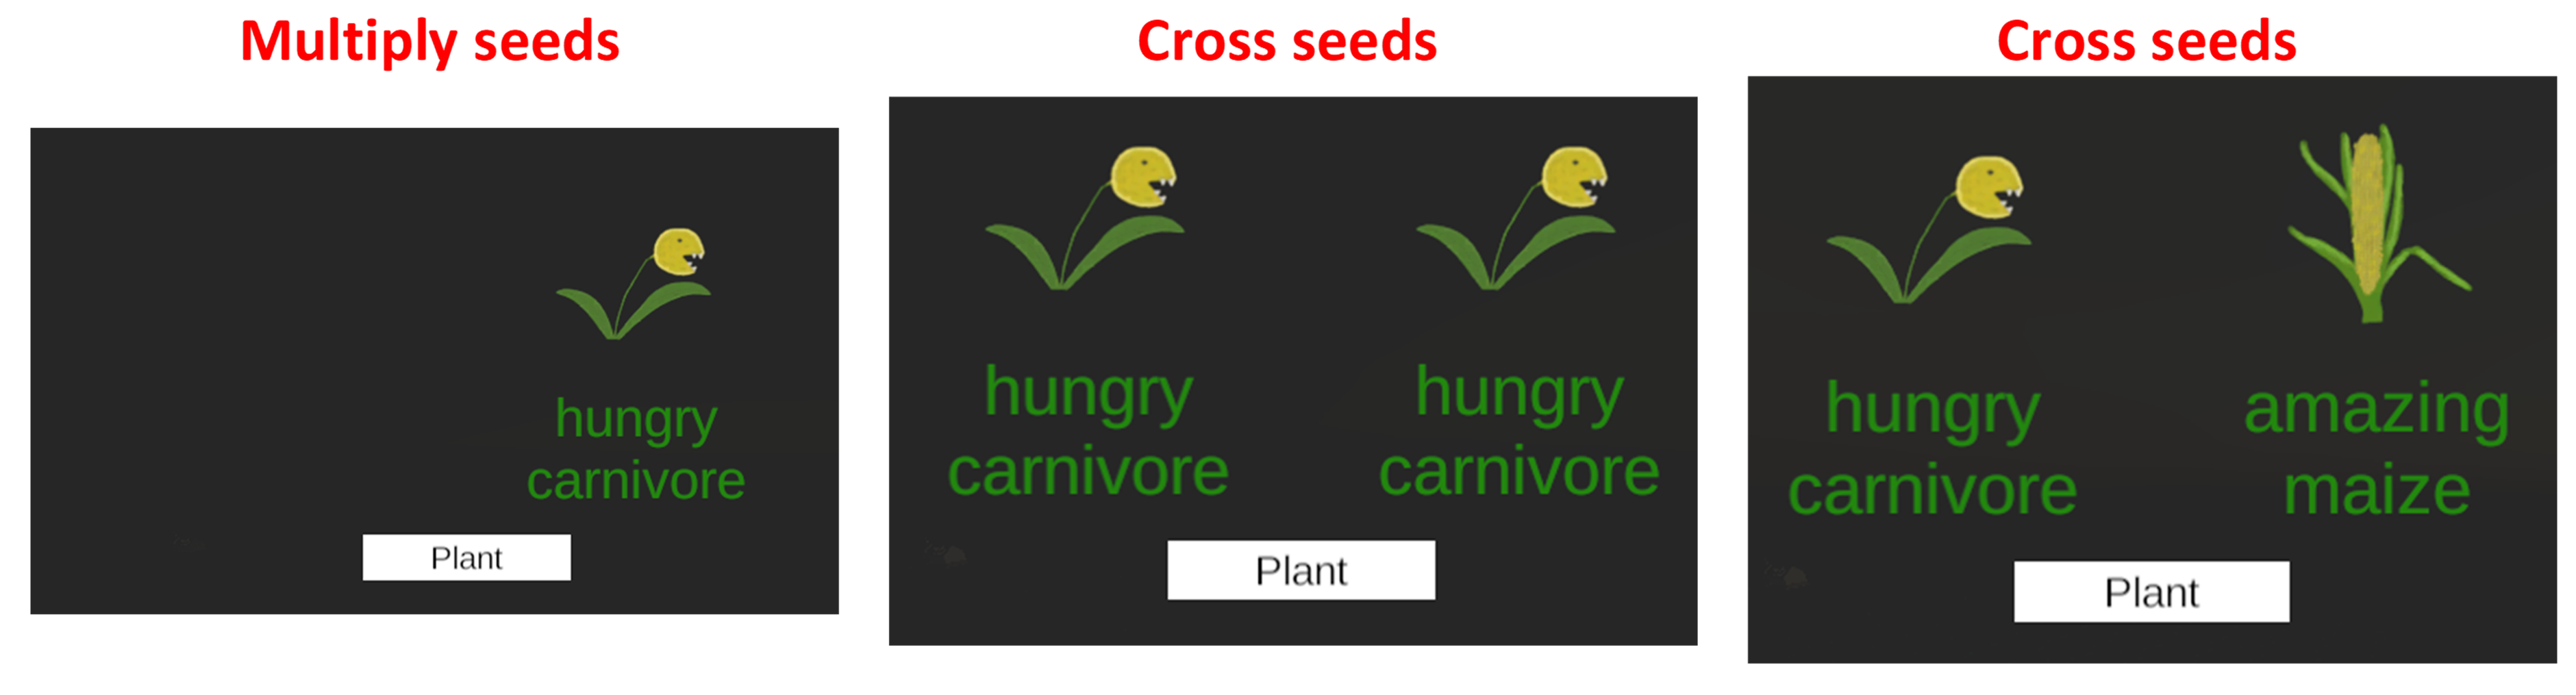 Cross seeds